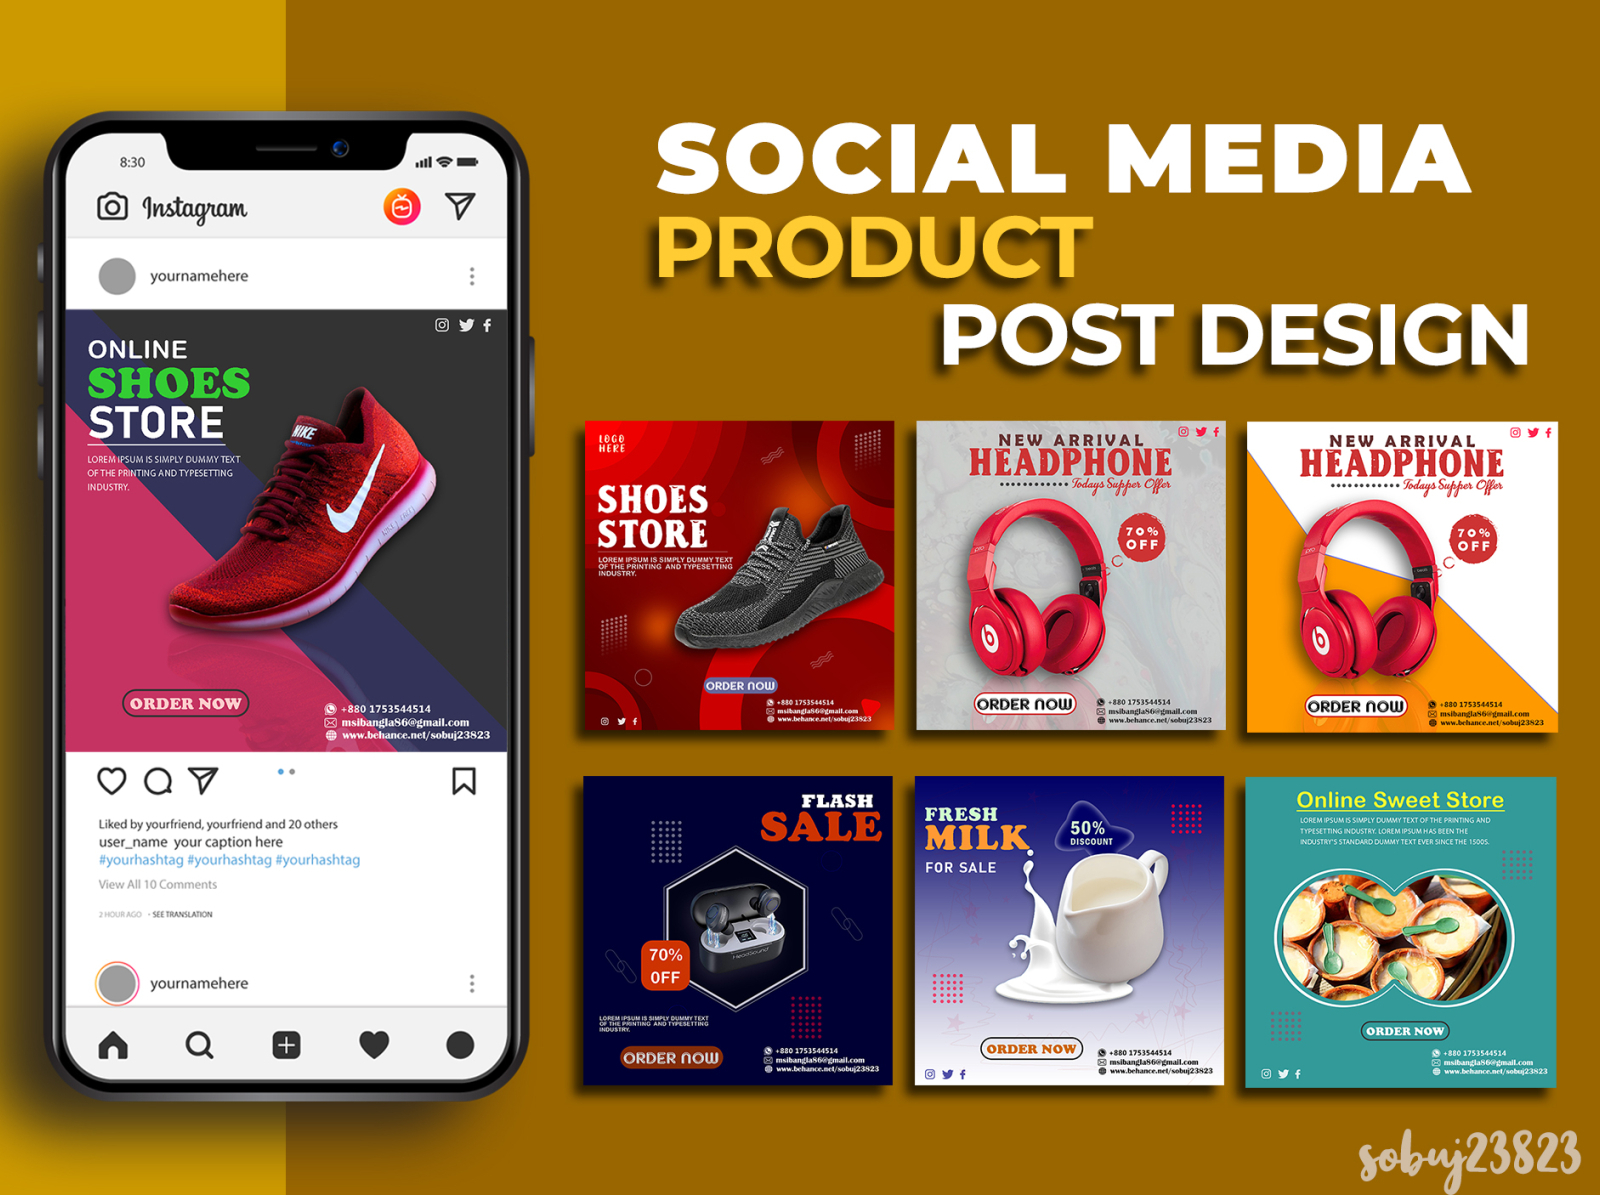 product-social-media-post-design-by-mr-freelance-on-dribbble